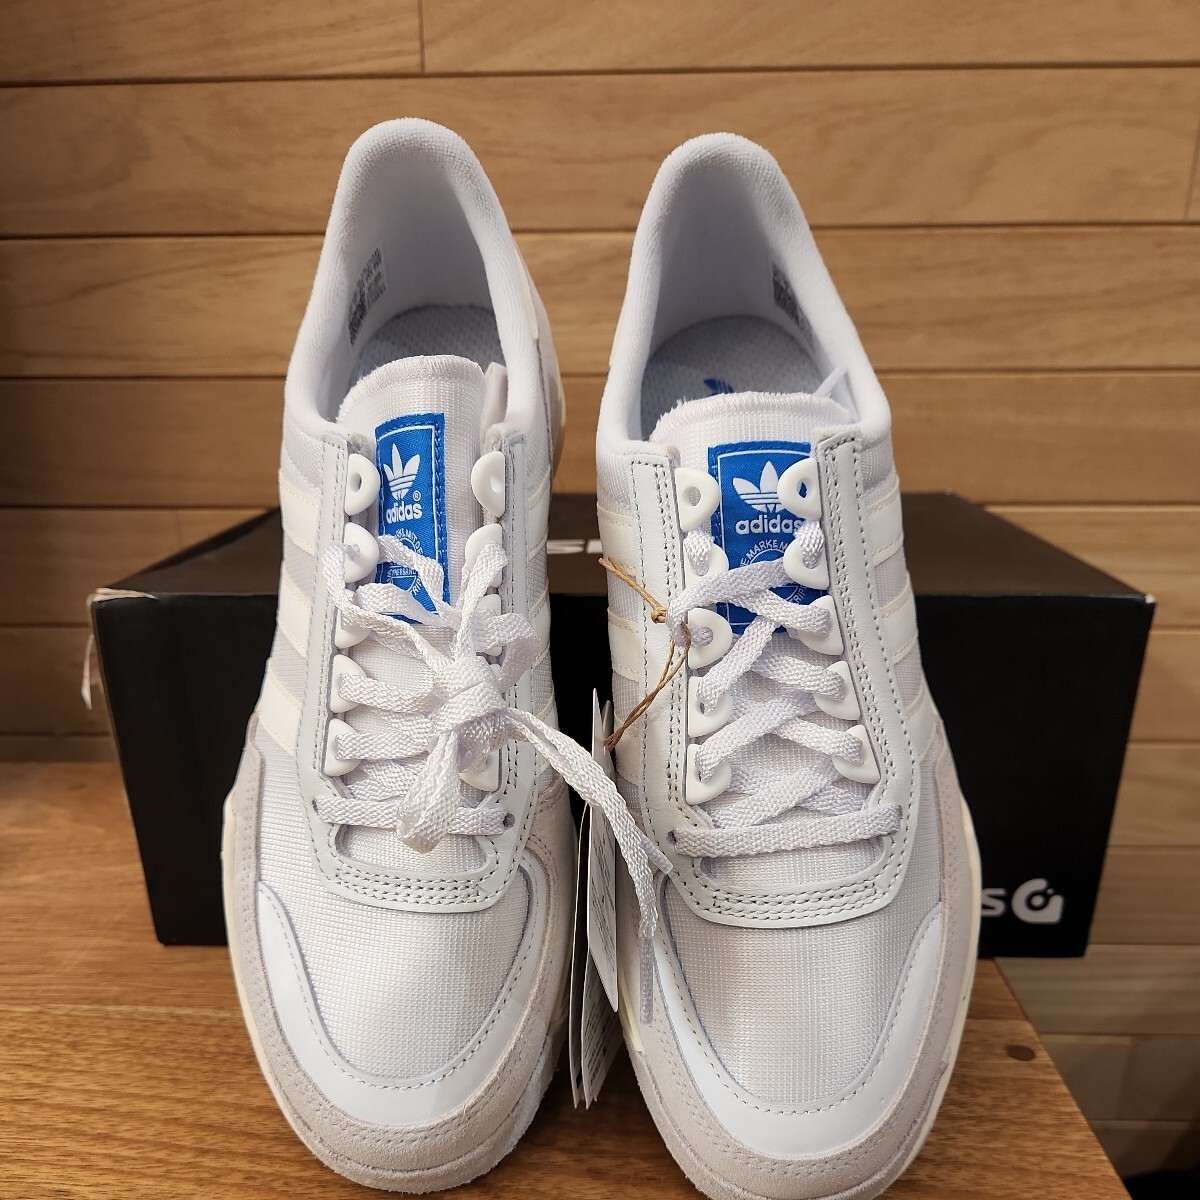 27cm new goods regular goods adidas Originals Adidas Originals CT86 sneakers shoes suede Mix popular white 